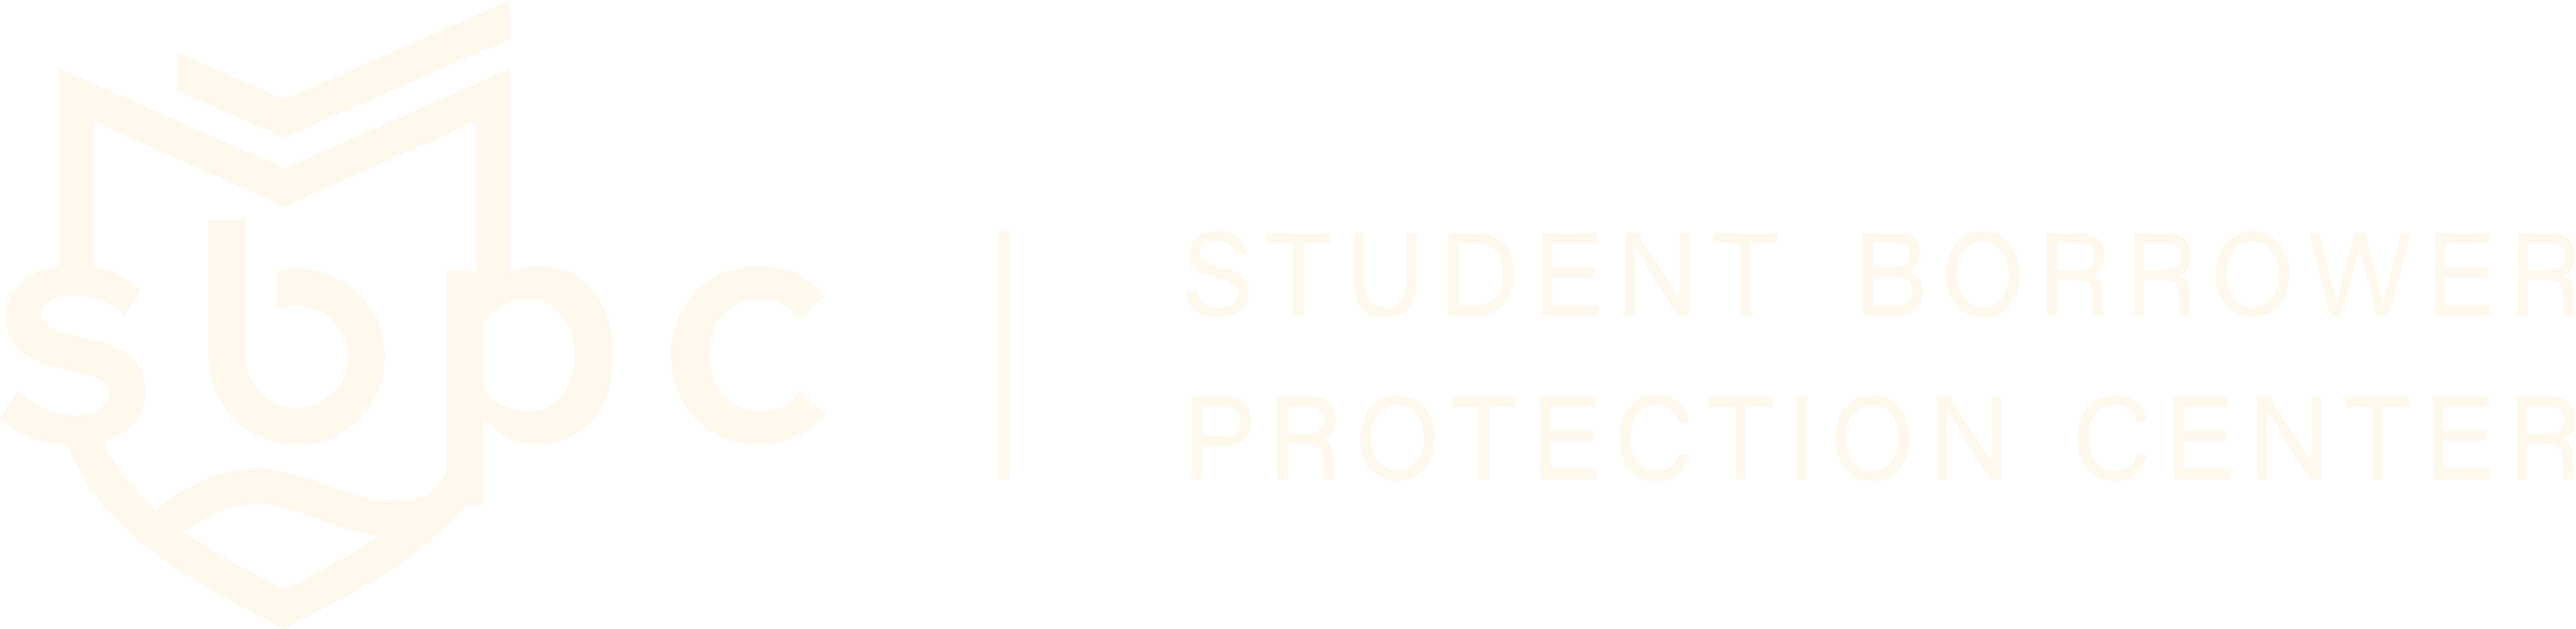 student borrow protection center